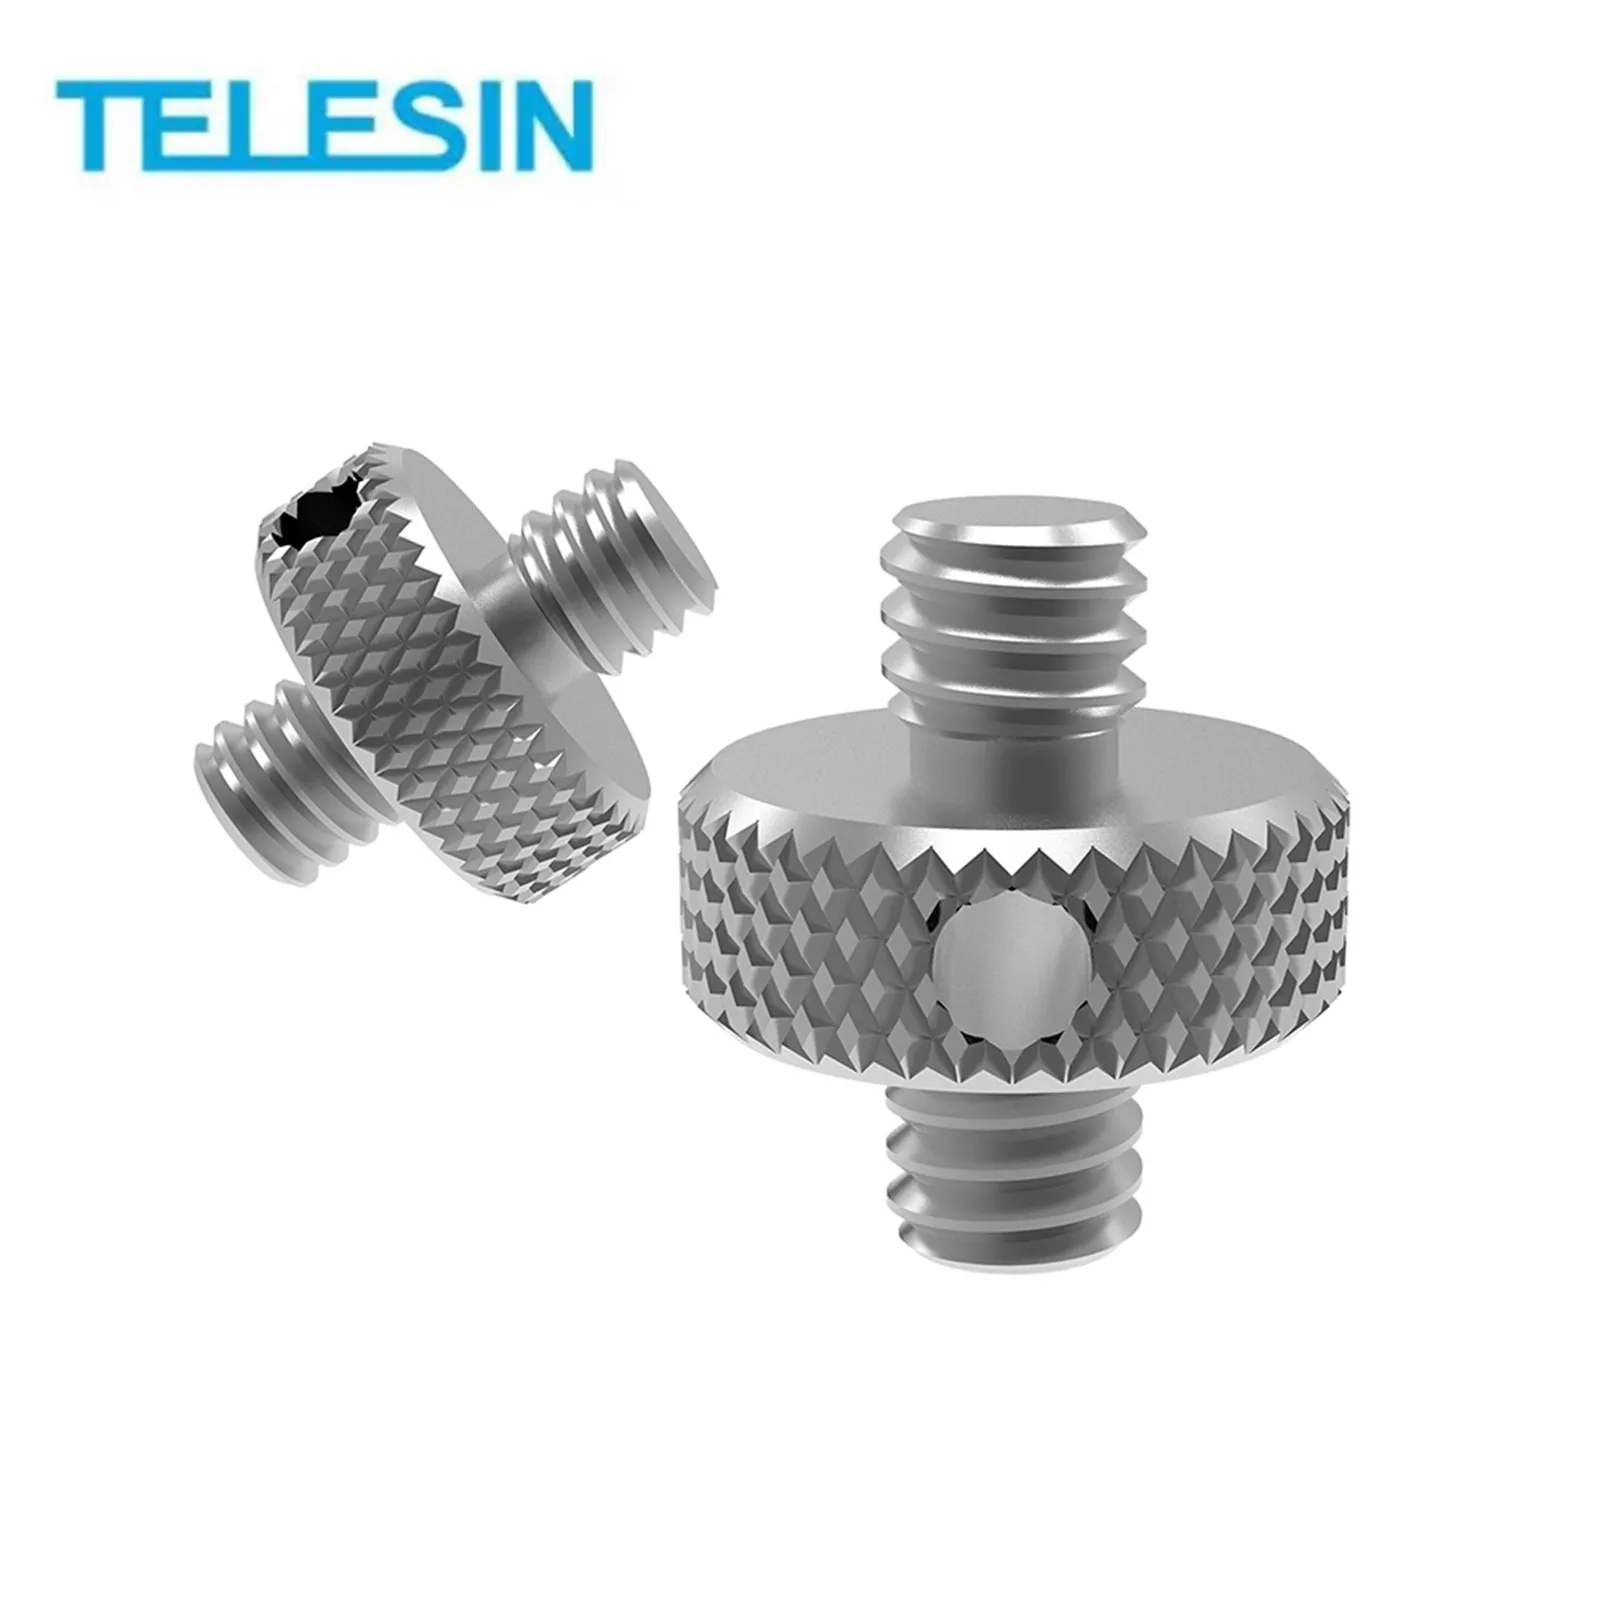 

TELESIN Double-headed 1/ 4" Male Screw Thread Convert Adapter with 3.5mm diameter round hole For Camera Tripod Ballhead 2pcs/lot